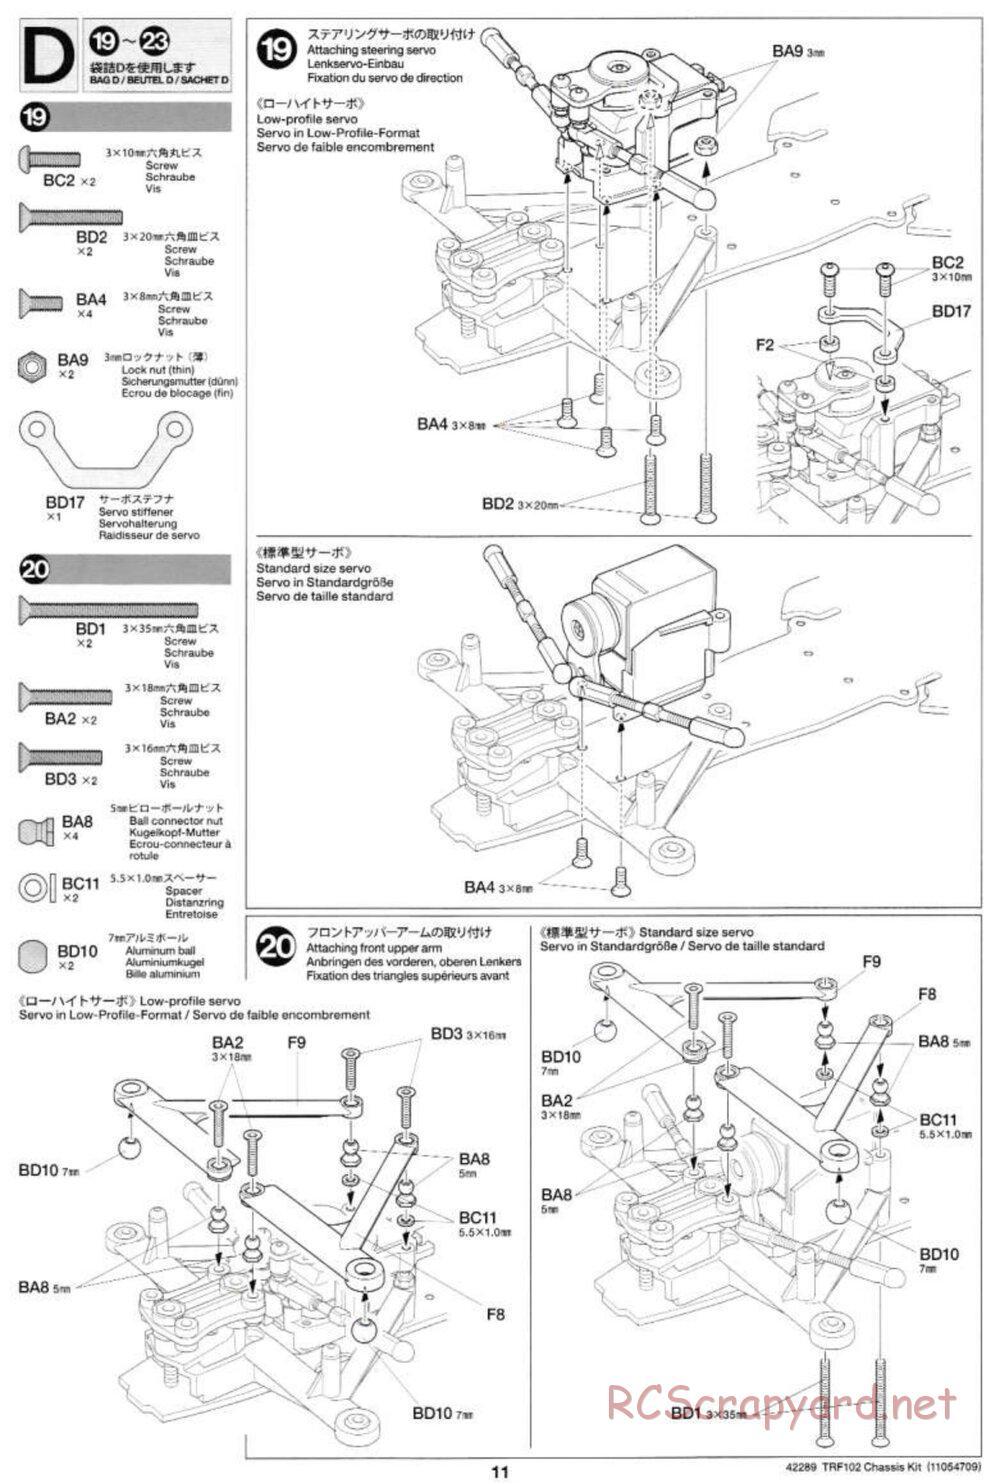 Tamiya - TRF102 Chassis - Manual - Page 11